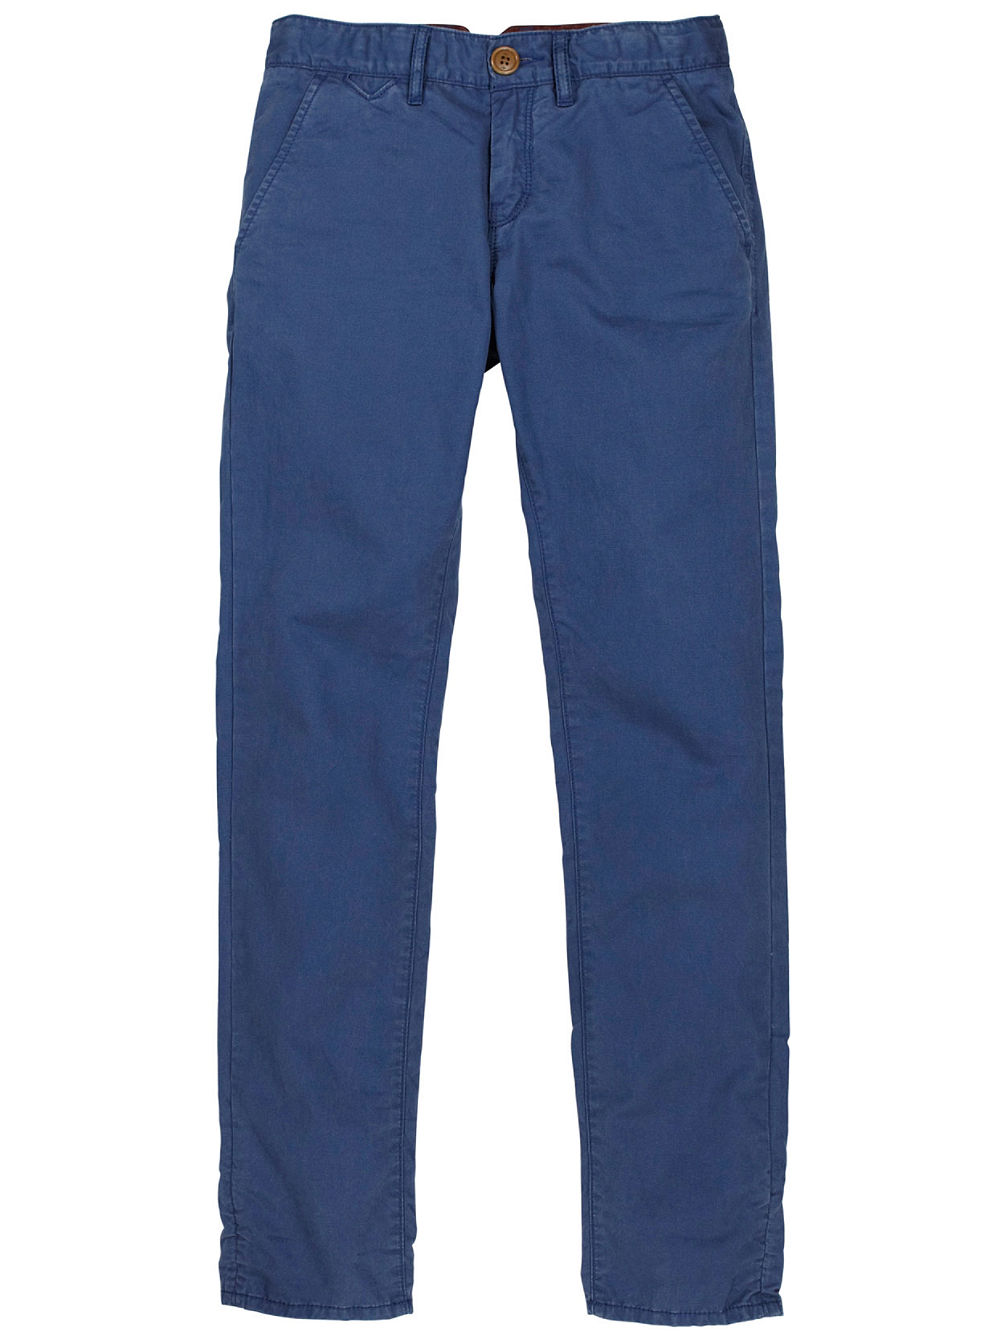 Buy O'Neill Friday Night Chino Pants Boys online at blue-tomato.com